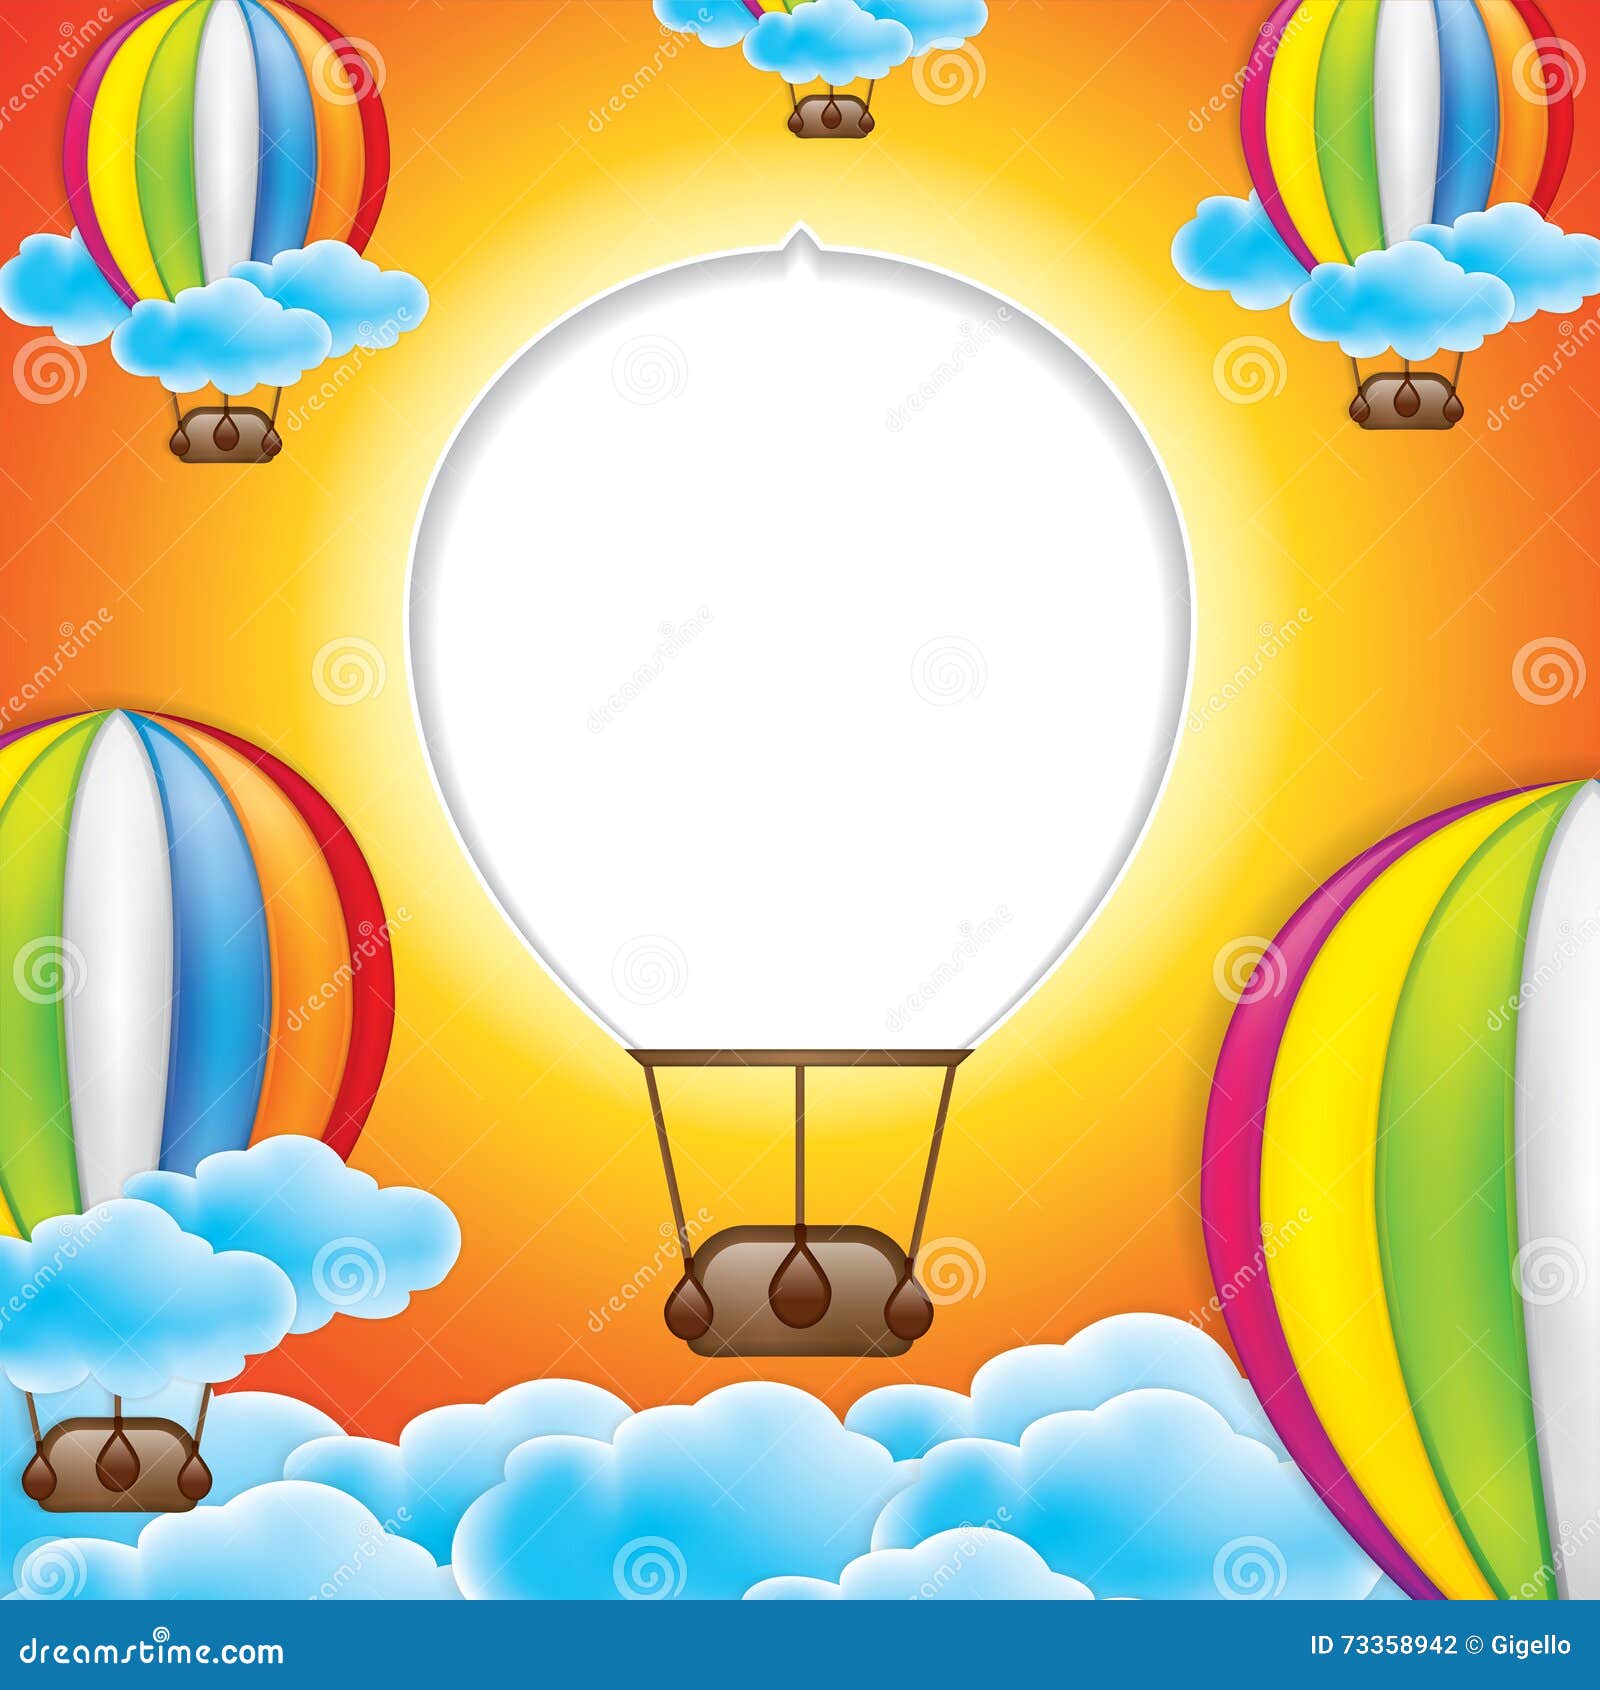 stock illustration hot air balloon frame vector illustration colorful balloons blue sky image